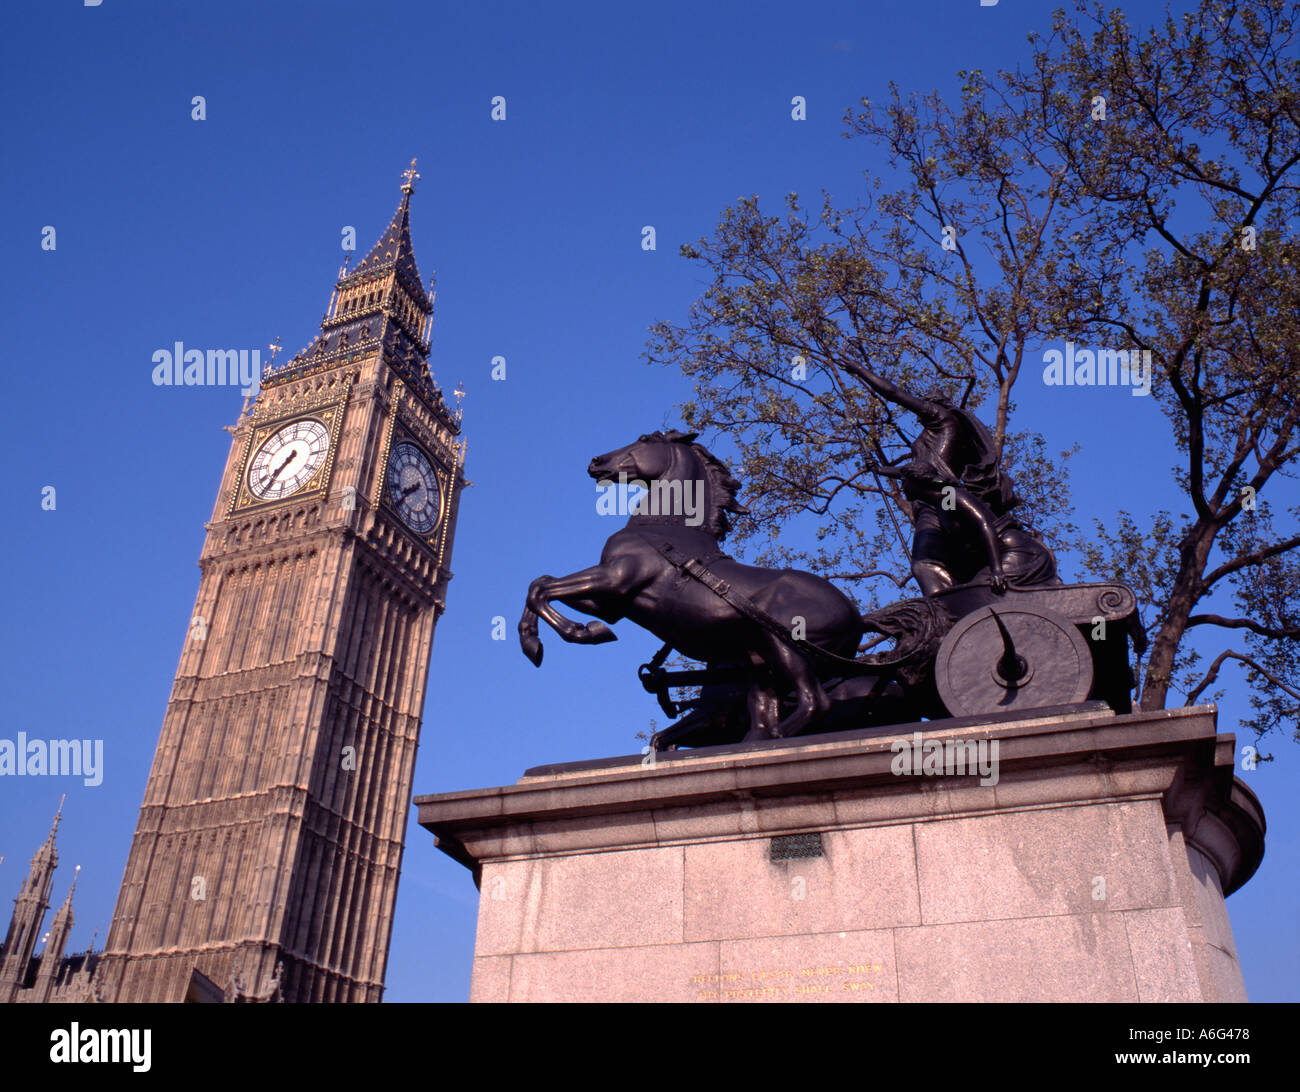 'Big Ben' and statue of Queen Boadicea, Westminster, London, England, UK. Stock Photo